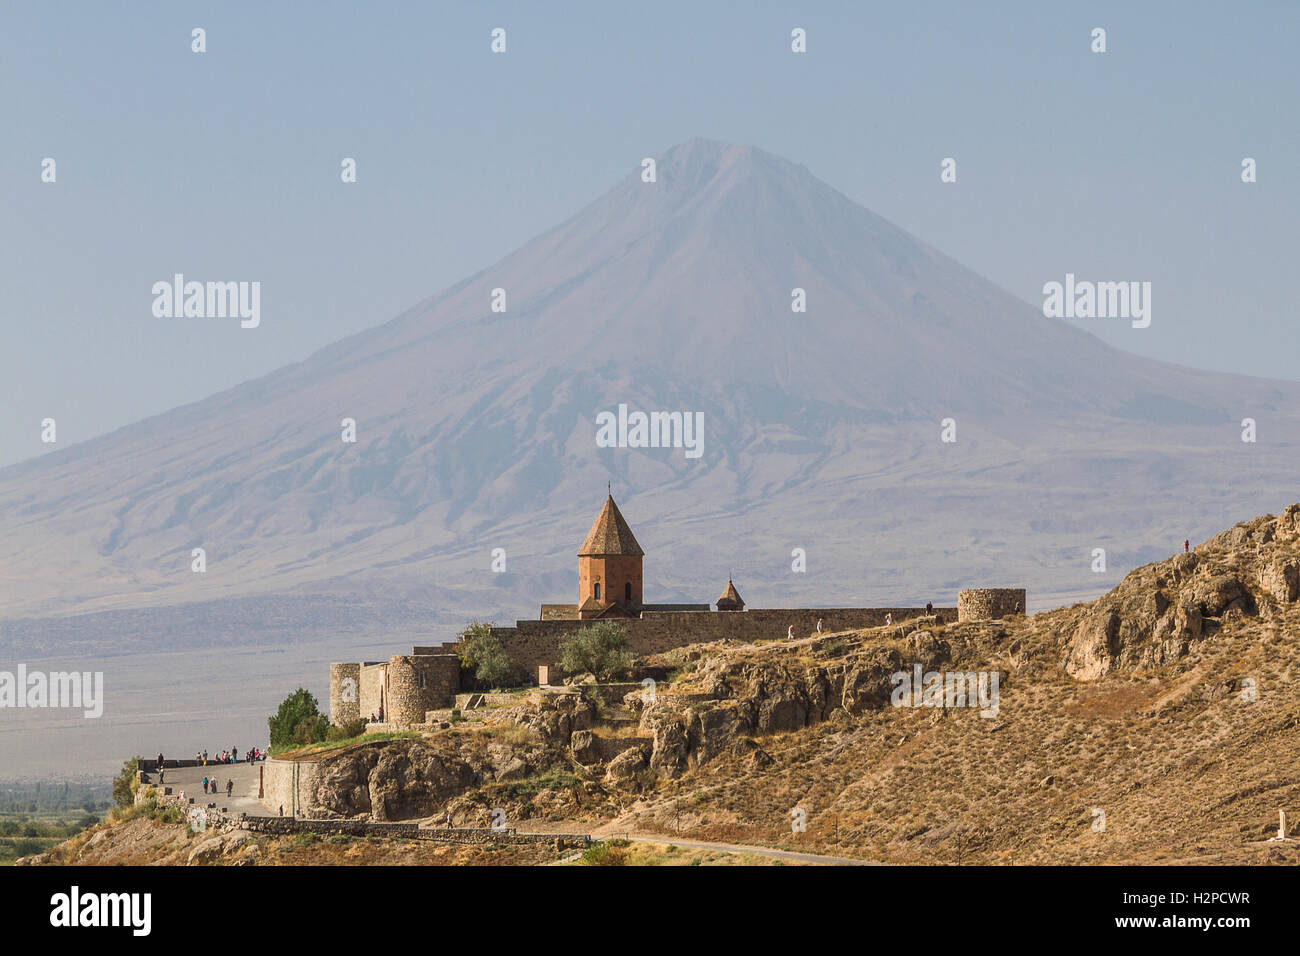 Khor Virap Monastery and the Little Mt Ararat, in Armenia. Stock Photo